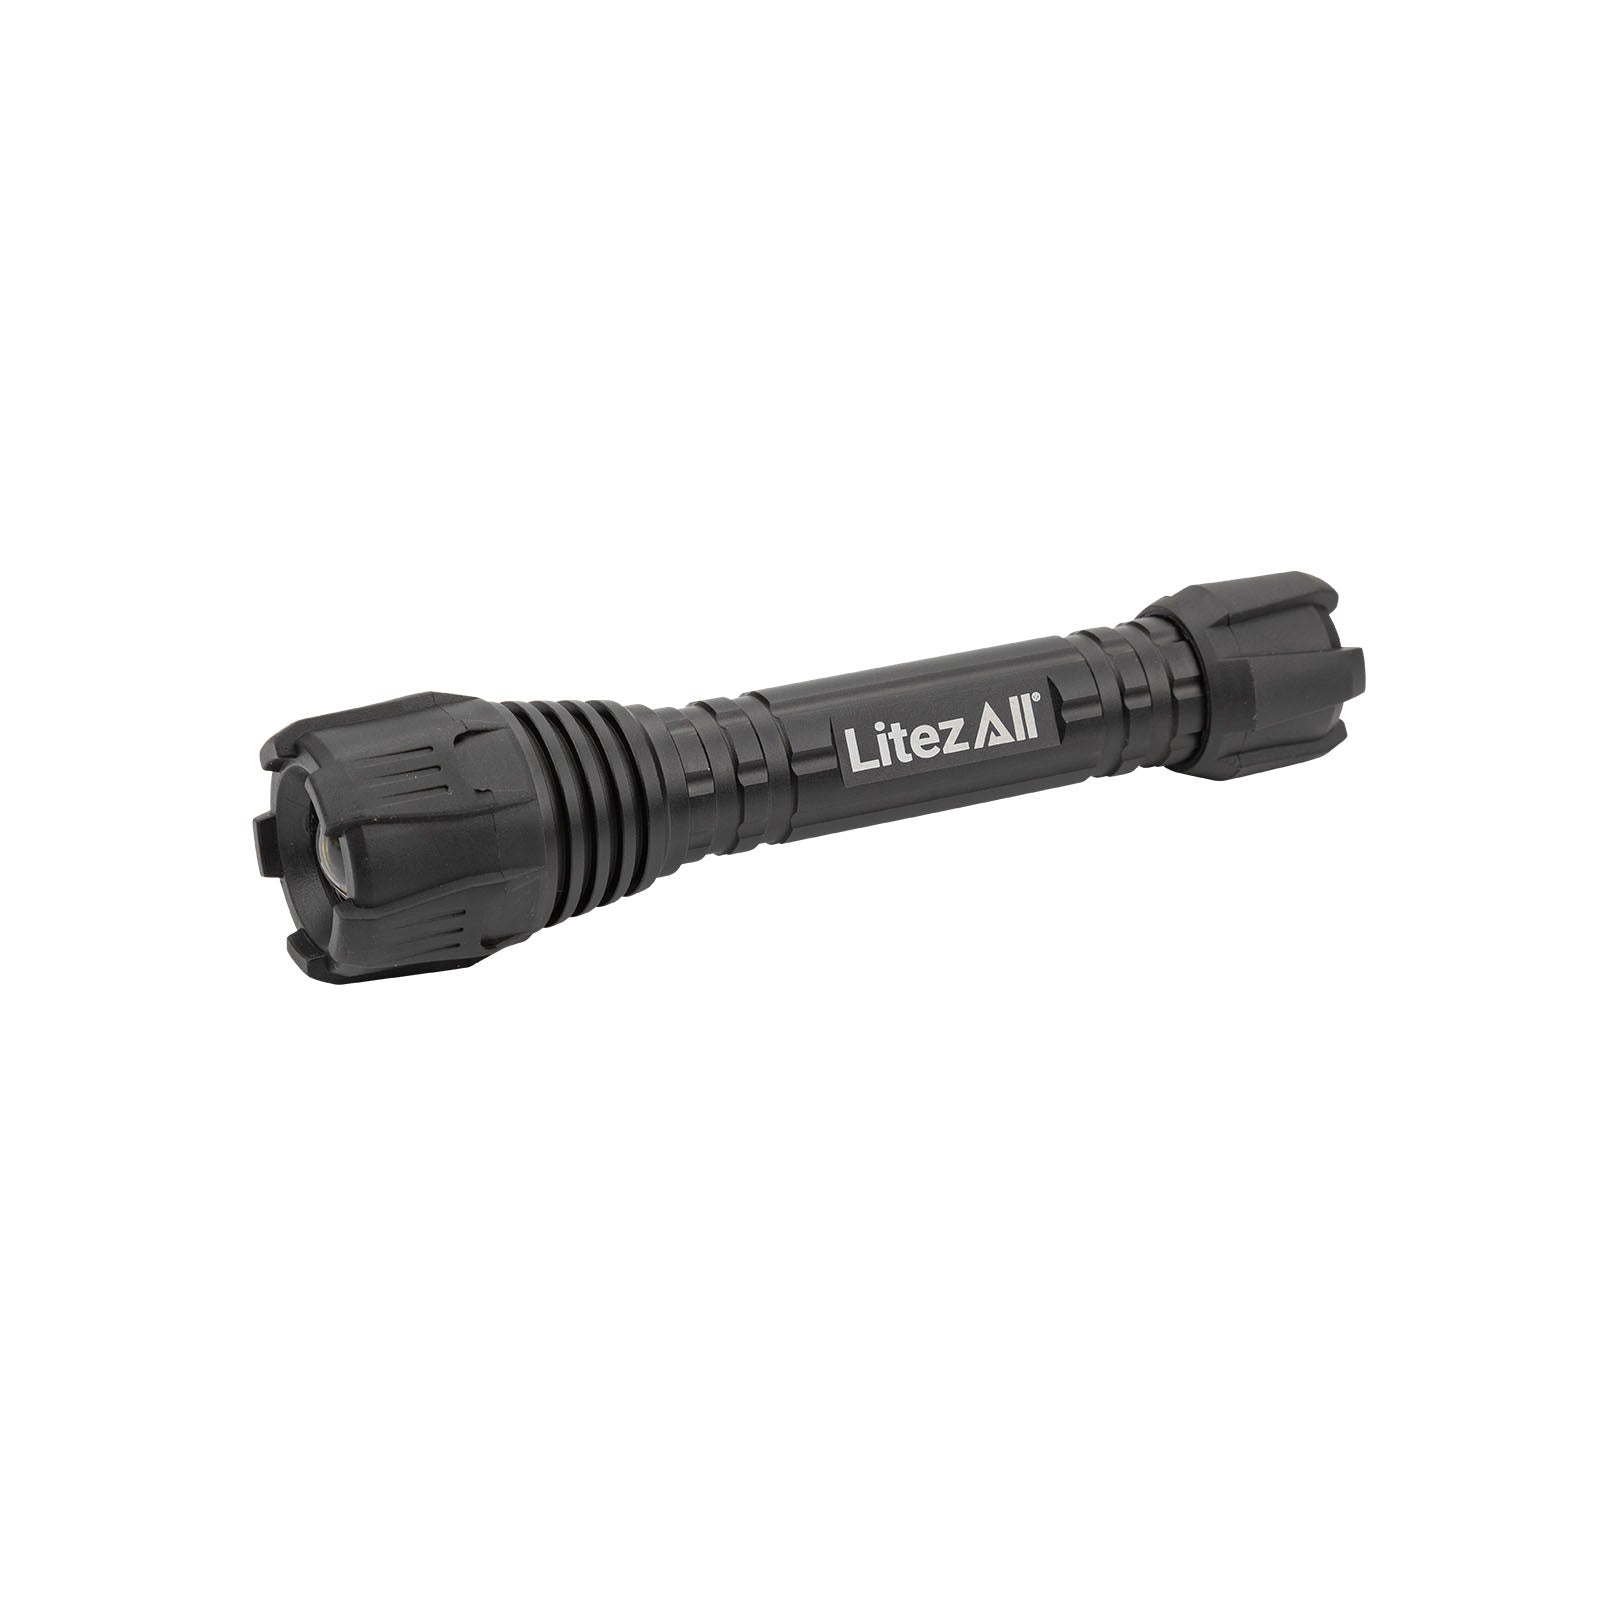 LitezAll Nearly Invincible 250 Lumen Tactical Flashlight - LitezAll - Tactical Flashlights - 1